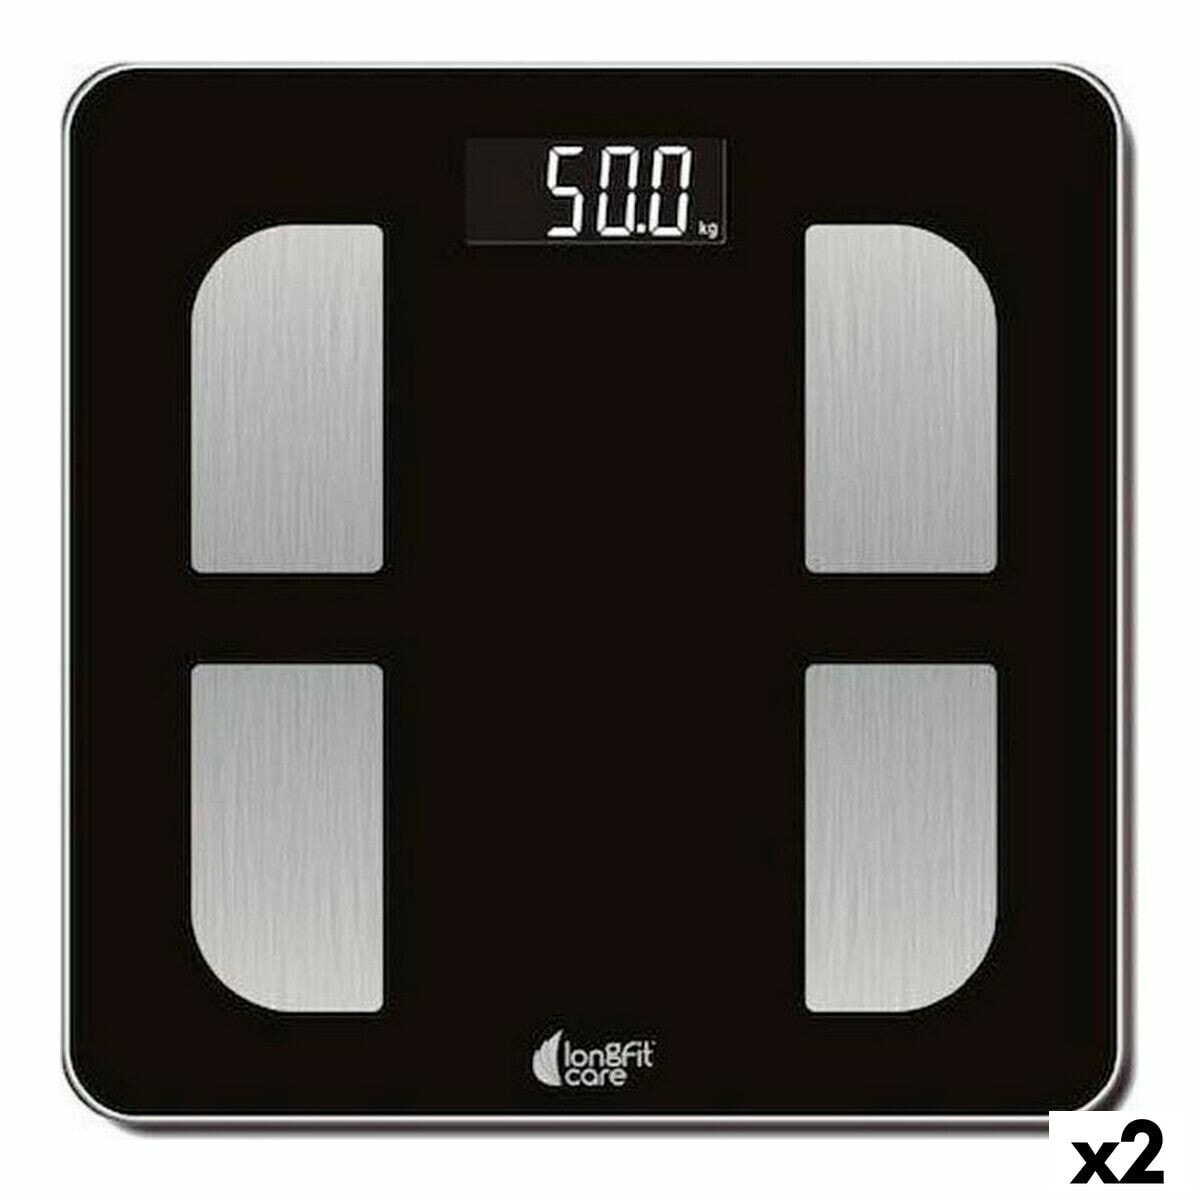 Digital Bathroom Scales LongFit Care Black Multifunction 33 x 4 x 33 cm (2 Units)